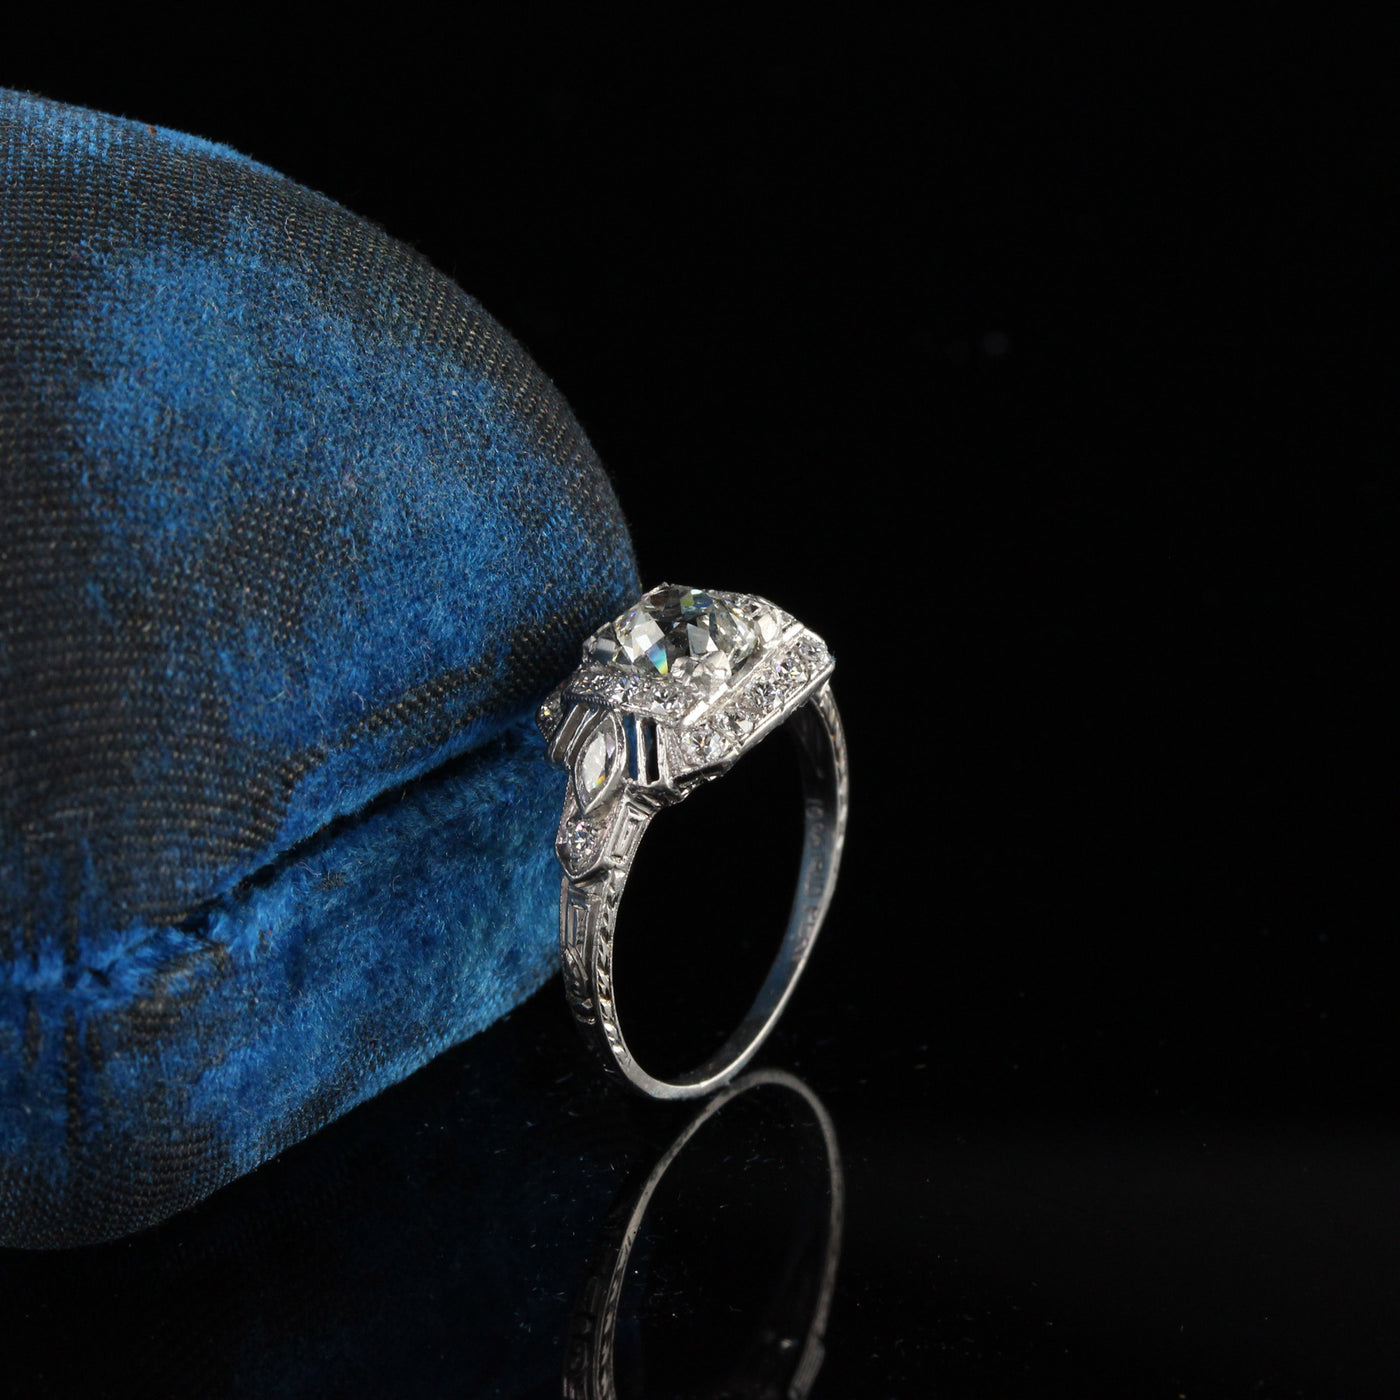 Antique Art Deco Platinum Engagement Ring - Size 6 3/4